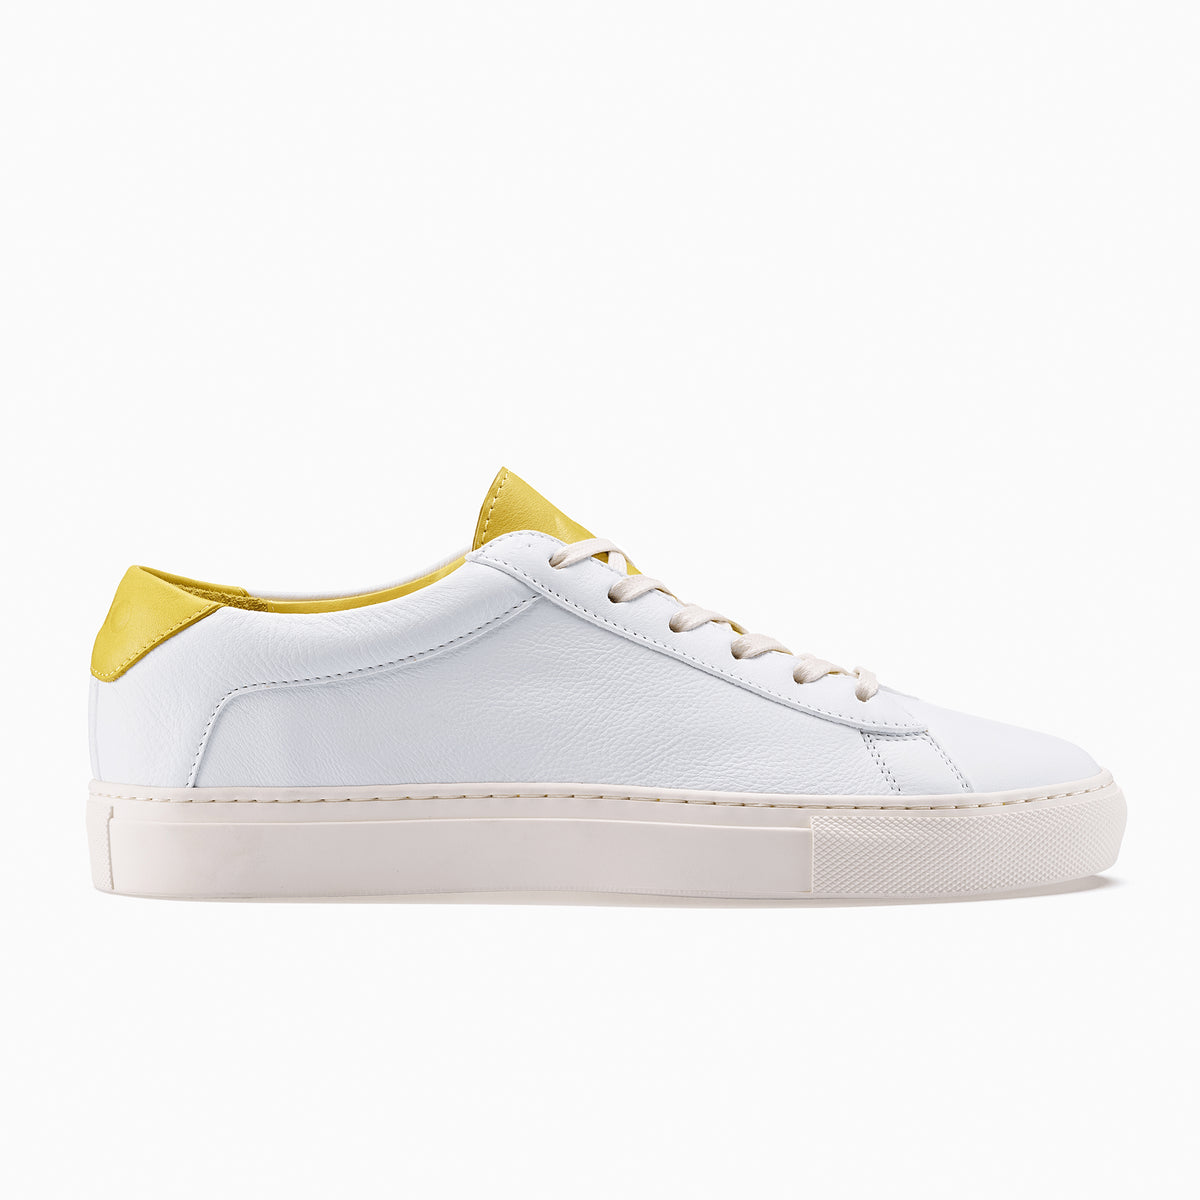 Low Top Leather Sneaker in White and Yellow | Capri White Yellow | KOIO